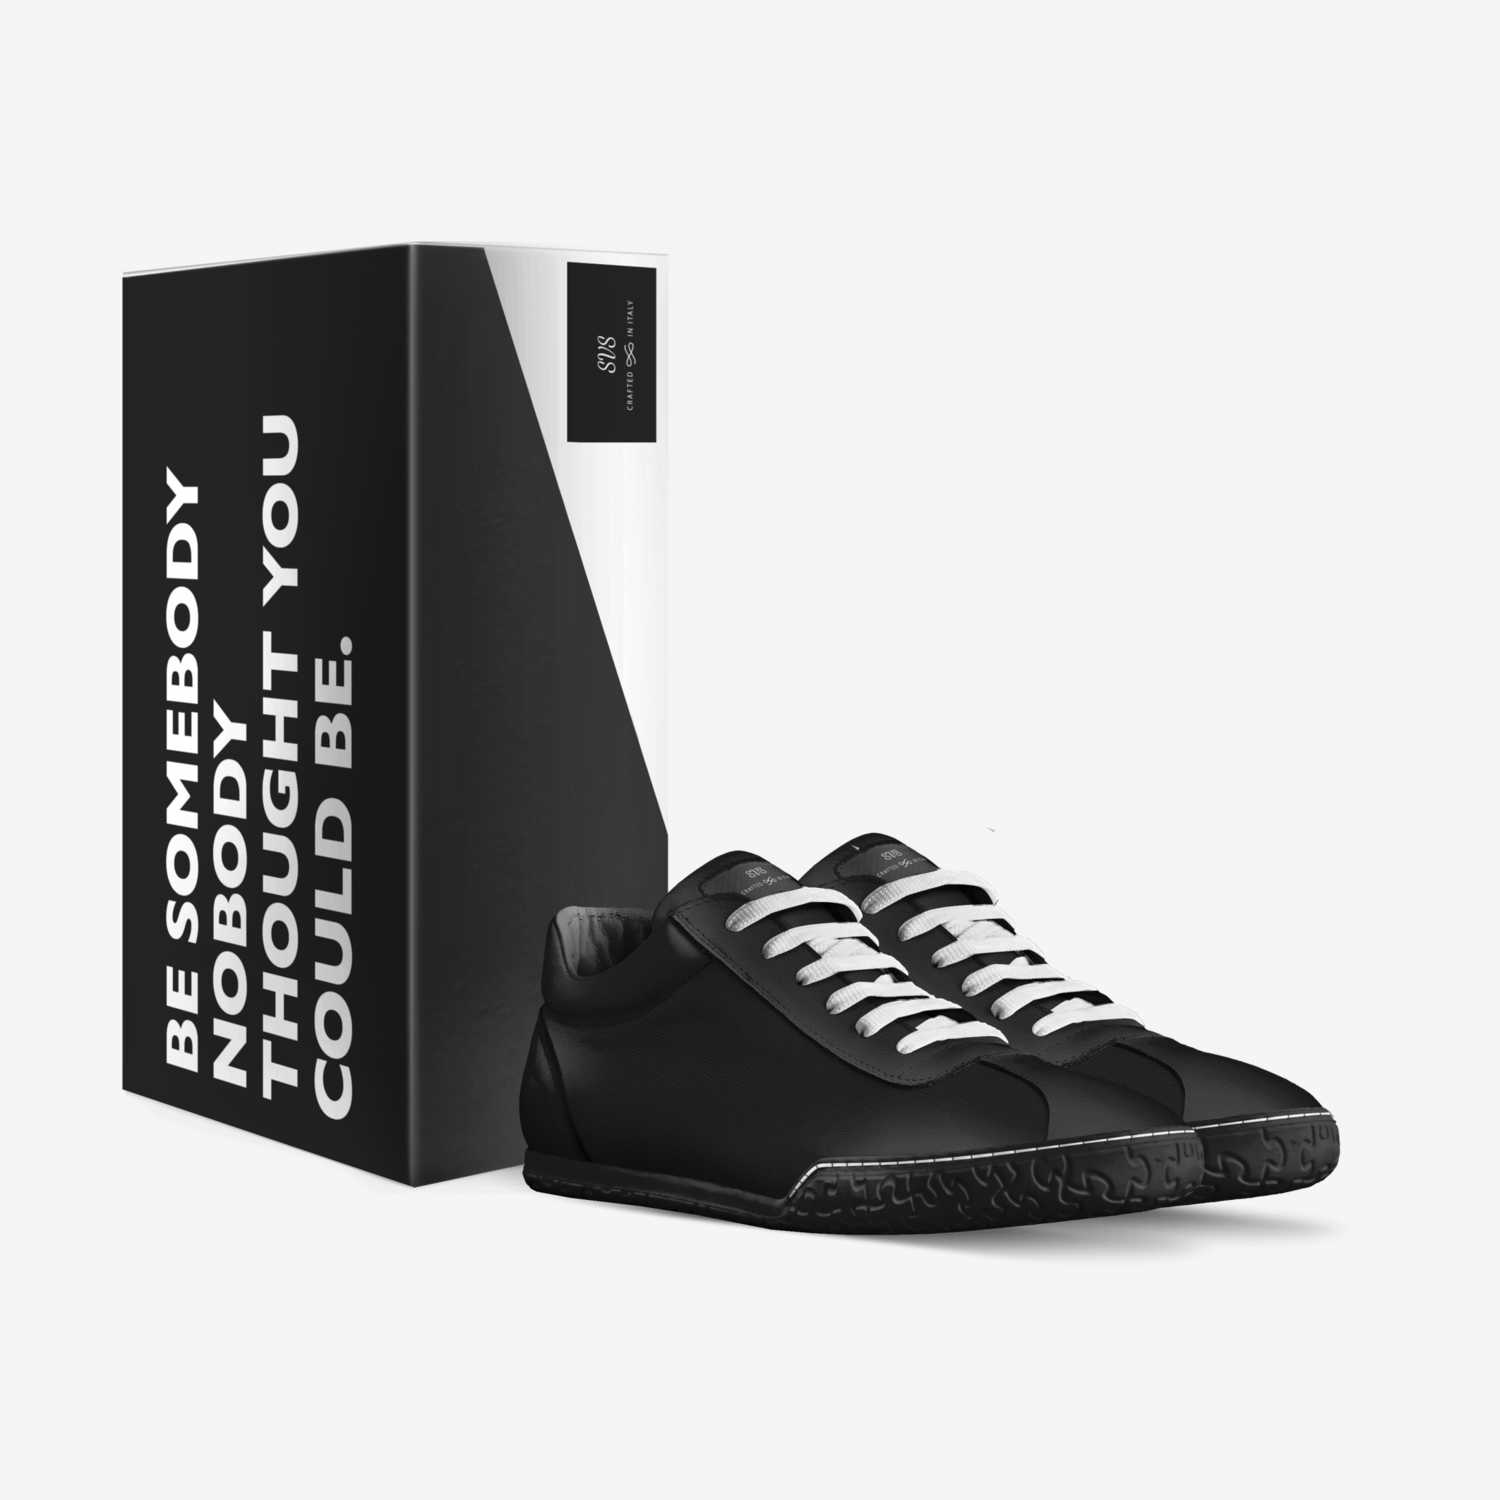 SVS custom made in Italy shoes by Srivishnu | Box view